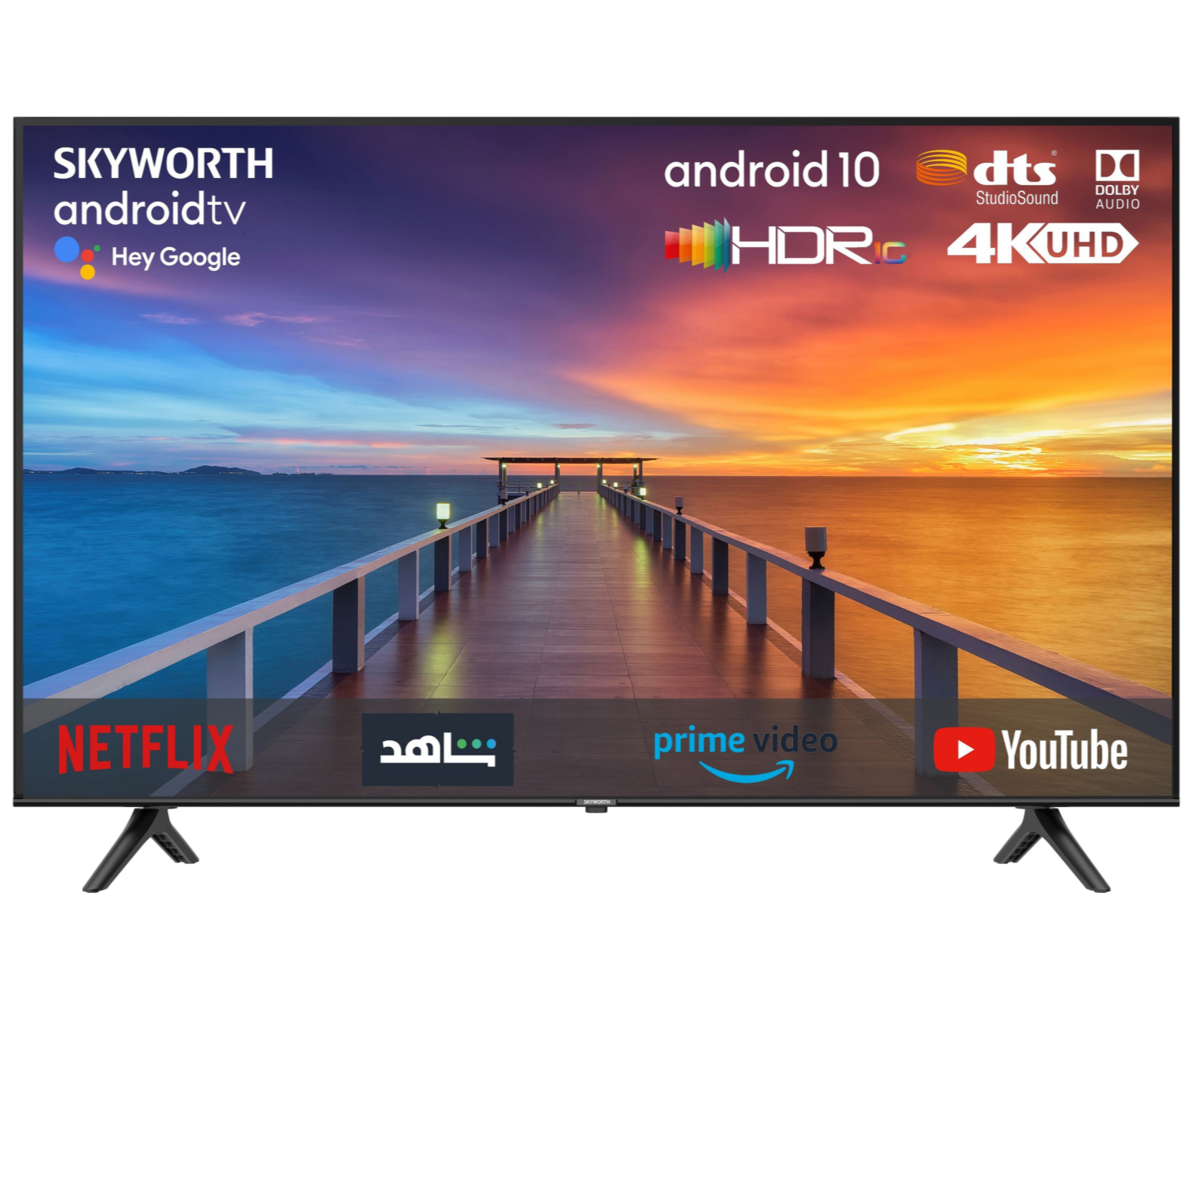 Skyworth LED Smart TV ,58” Android10.0 UHD 4K, 58SUE9200